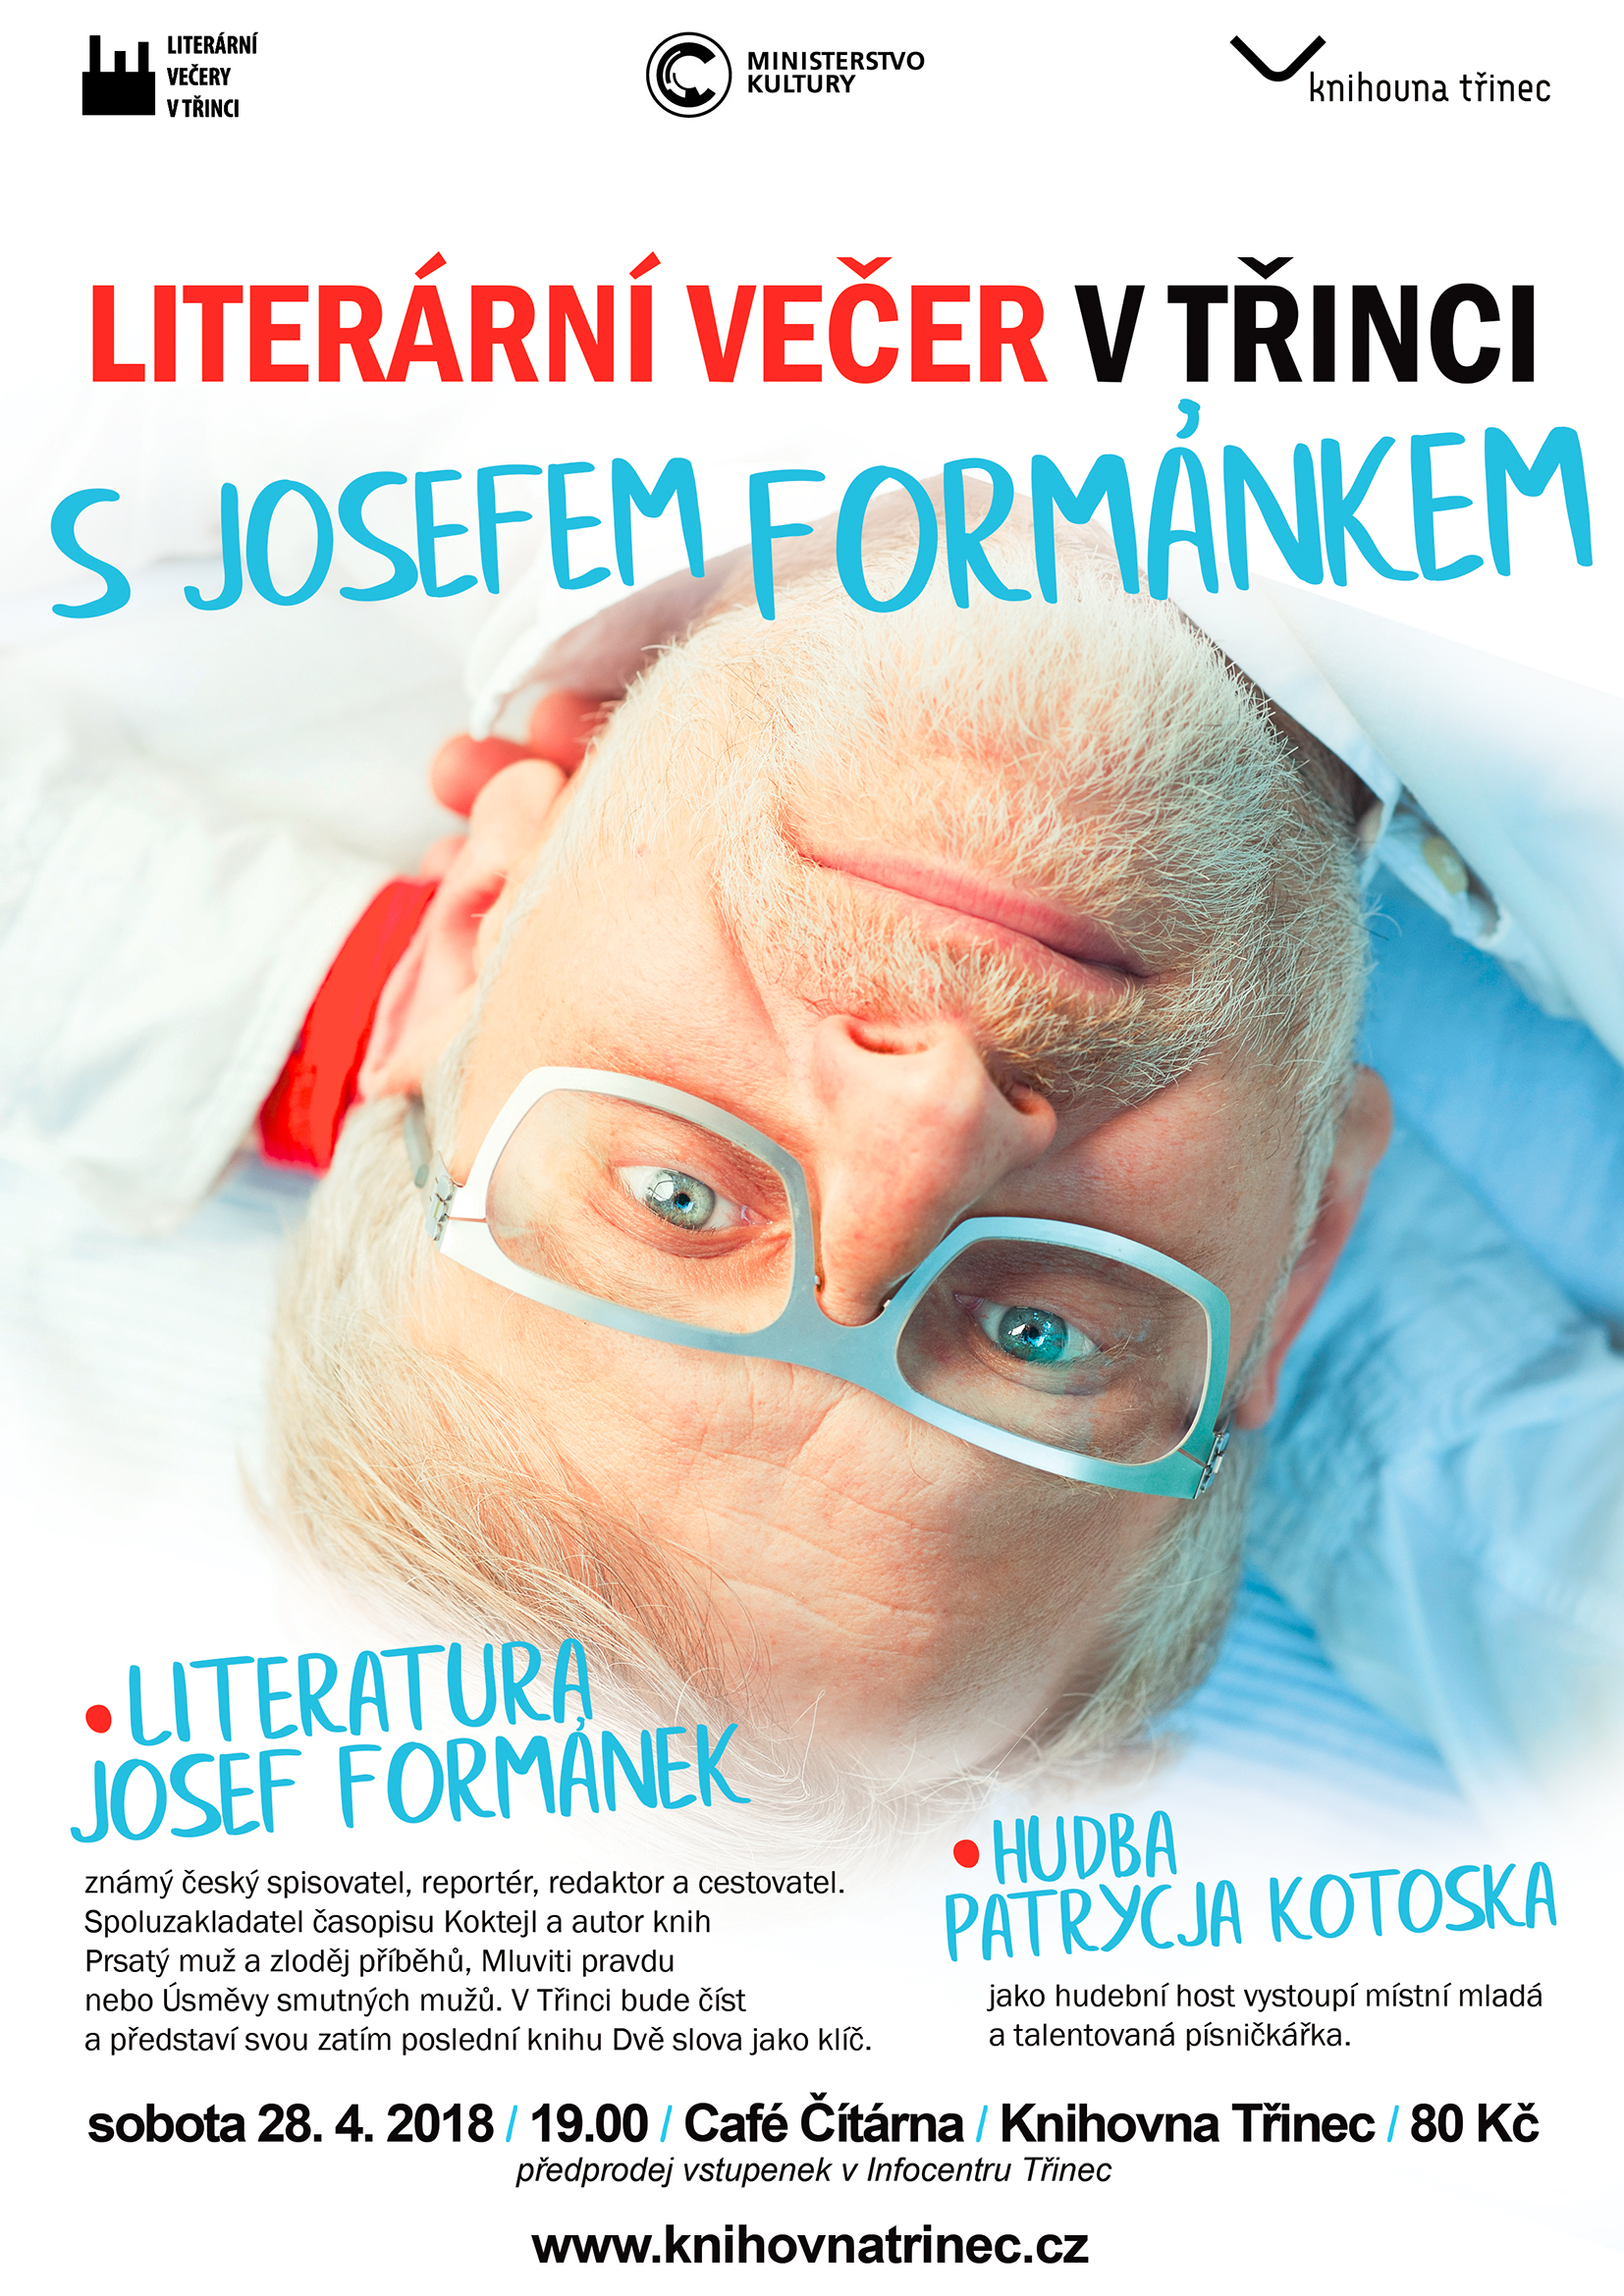 LVT s Josefem Formánkem plakát